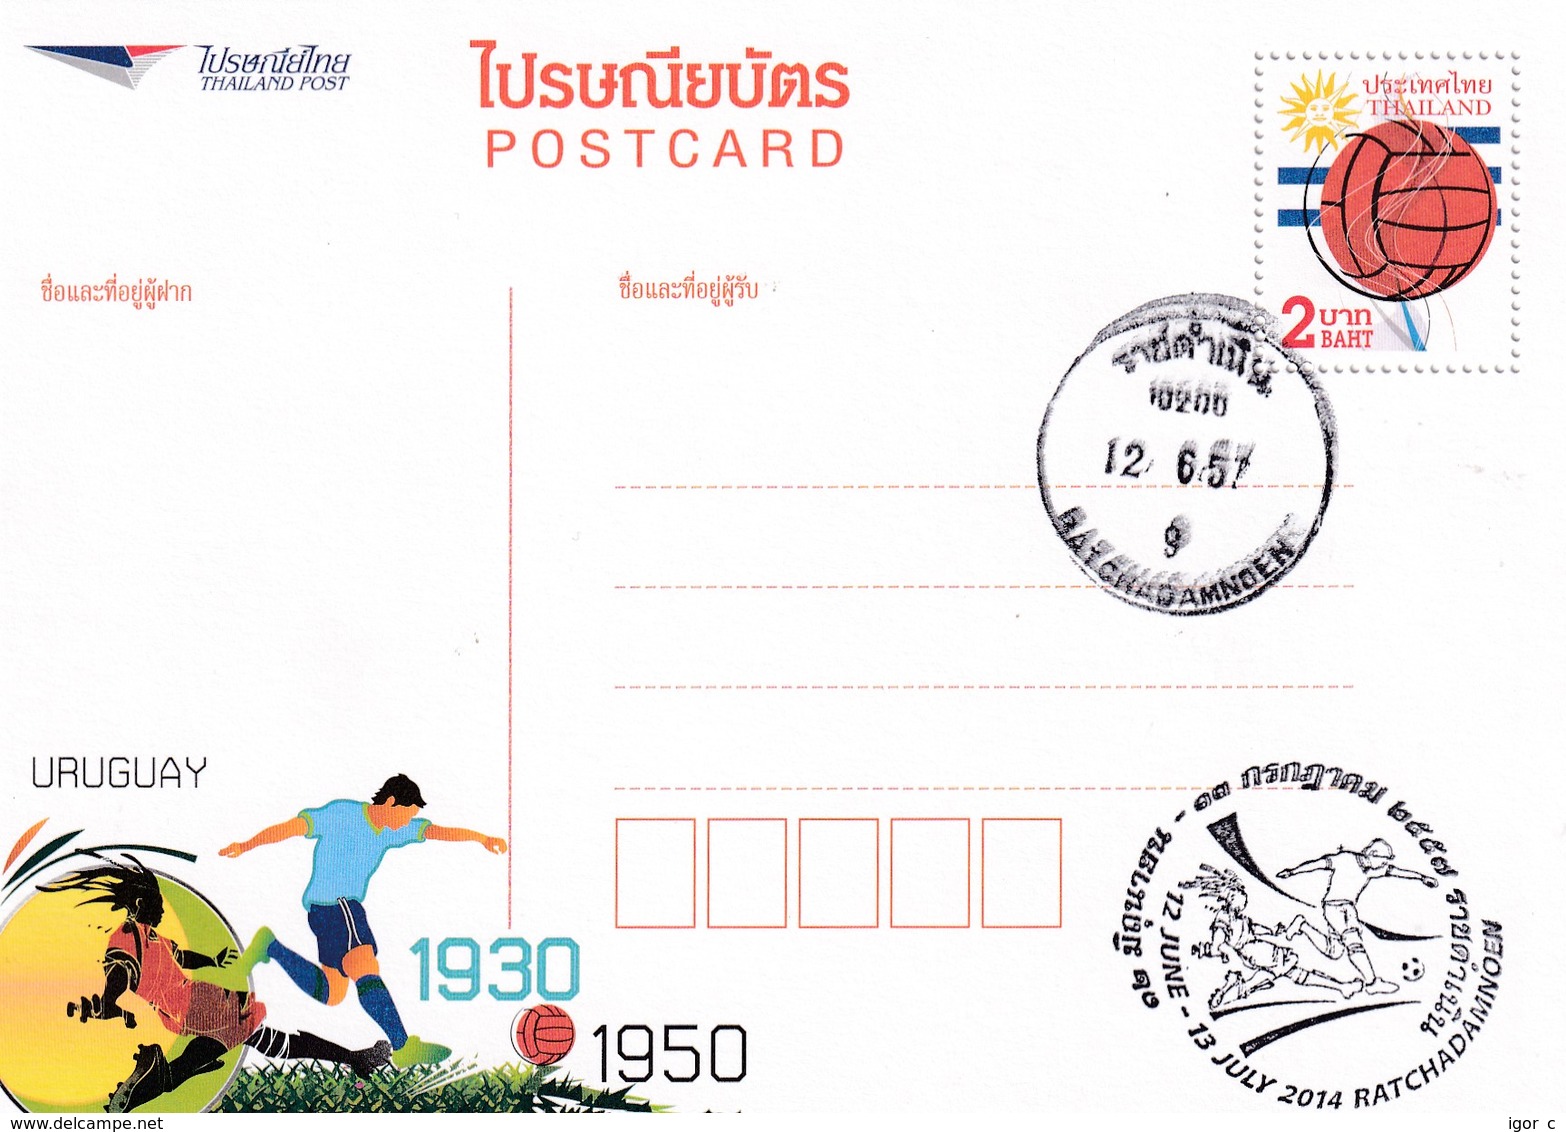 Thailand 2014 Postal Stationery Card: Football Fussball Soccer Calcio; FIFA World Cup 1930 1950 Brasil; Uruguay Champion - 1930 – Uruguay